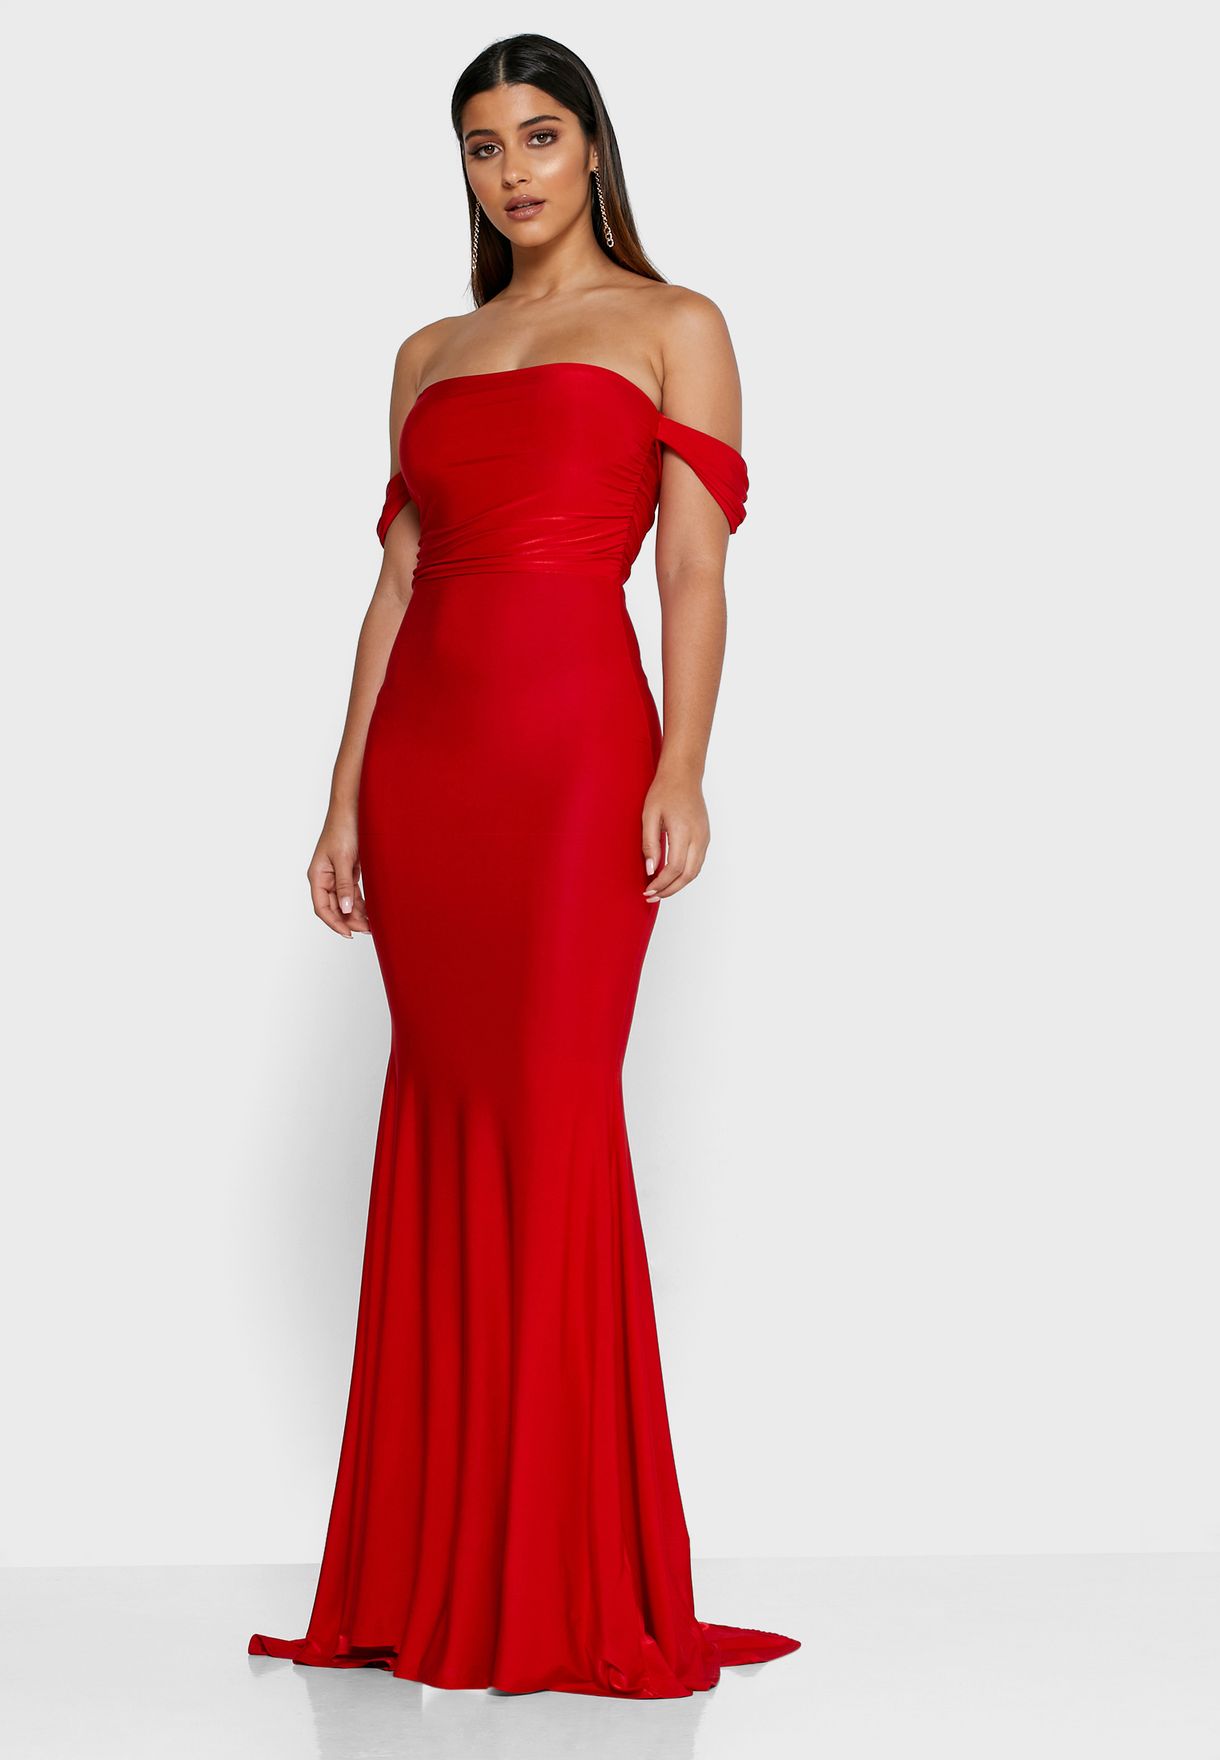 red bardot fishtail dress